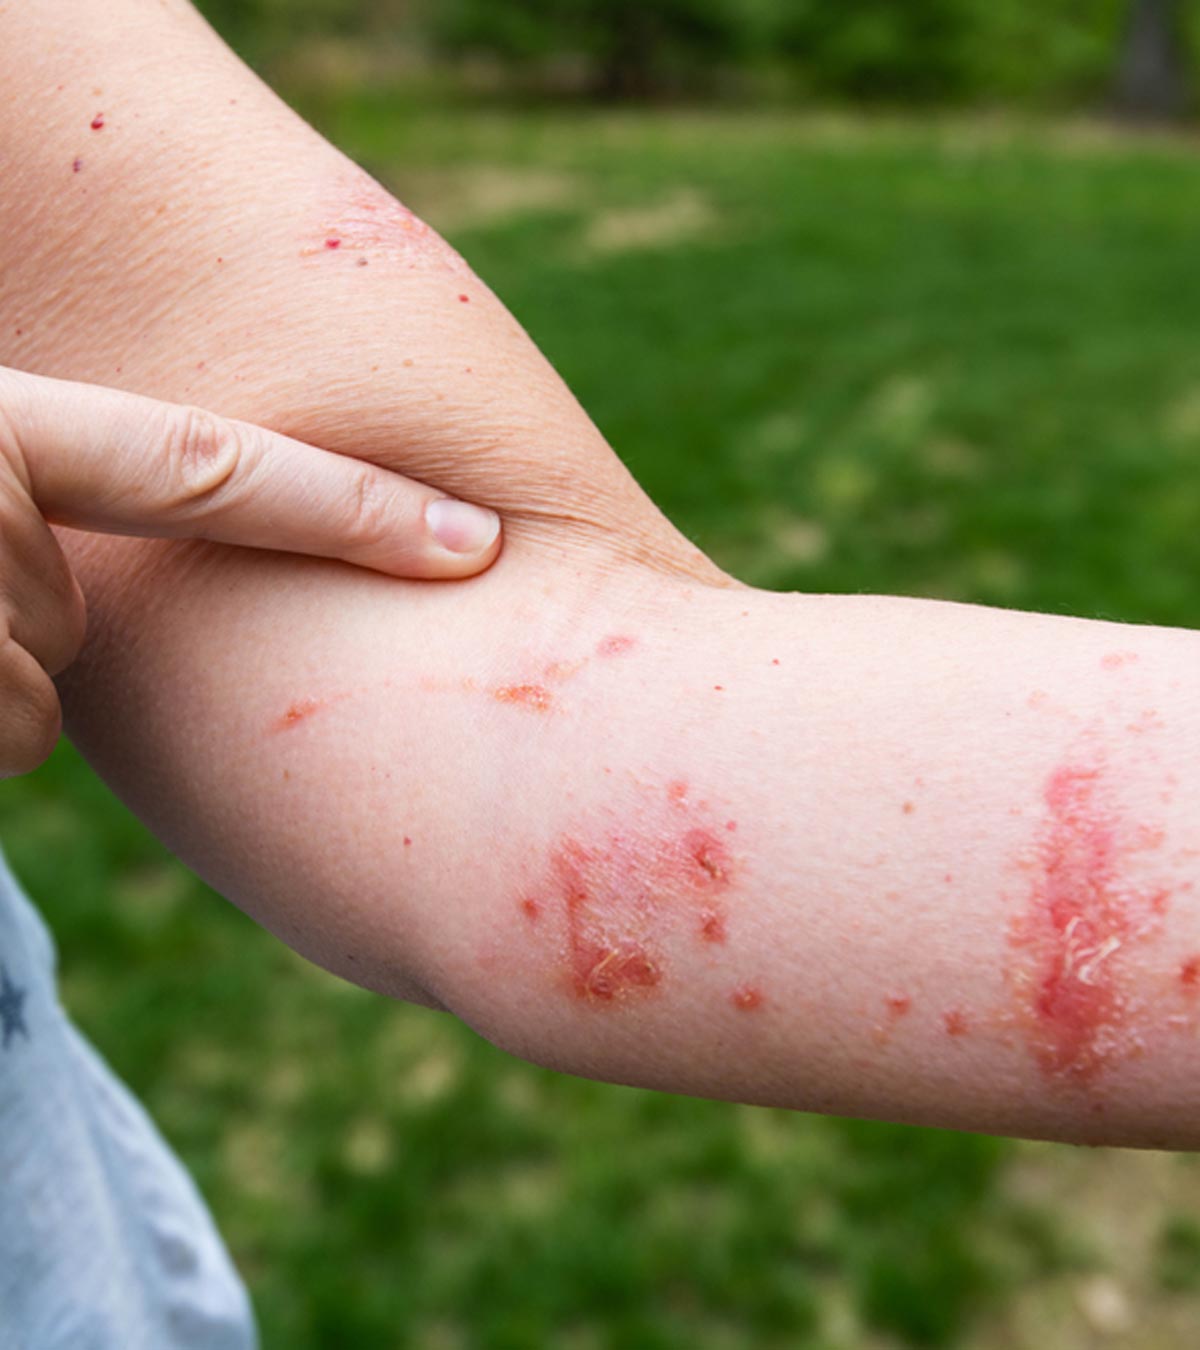 Poison Ivy Rash On Children: Symptoms And Treatment